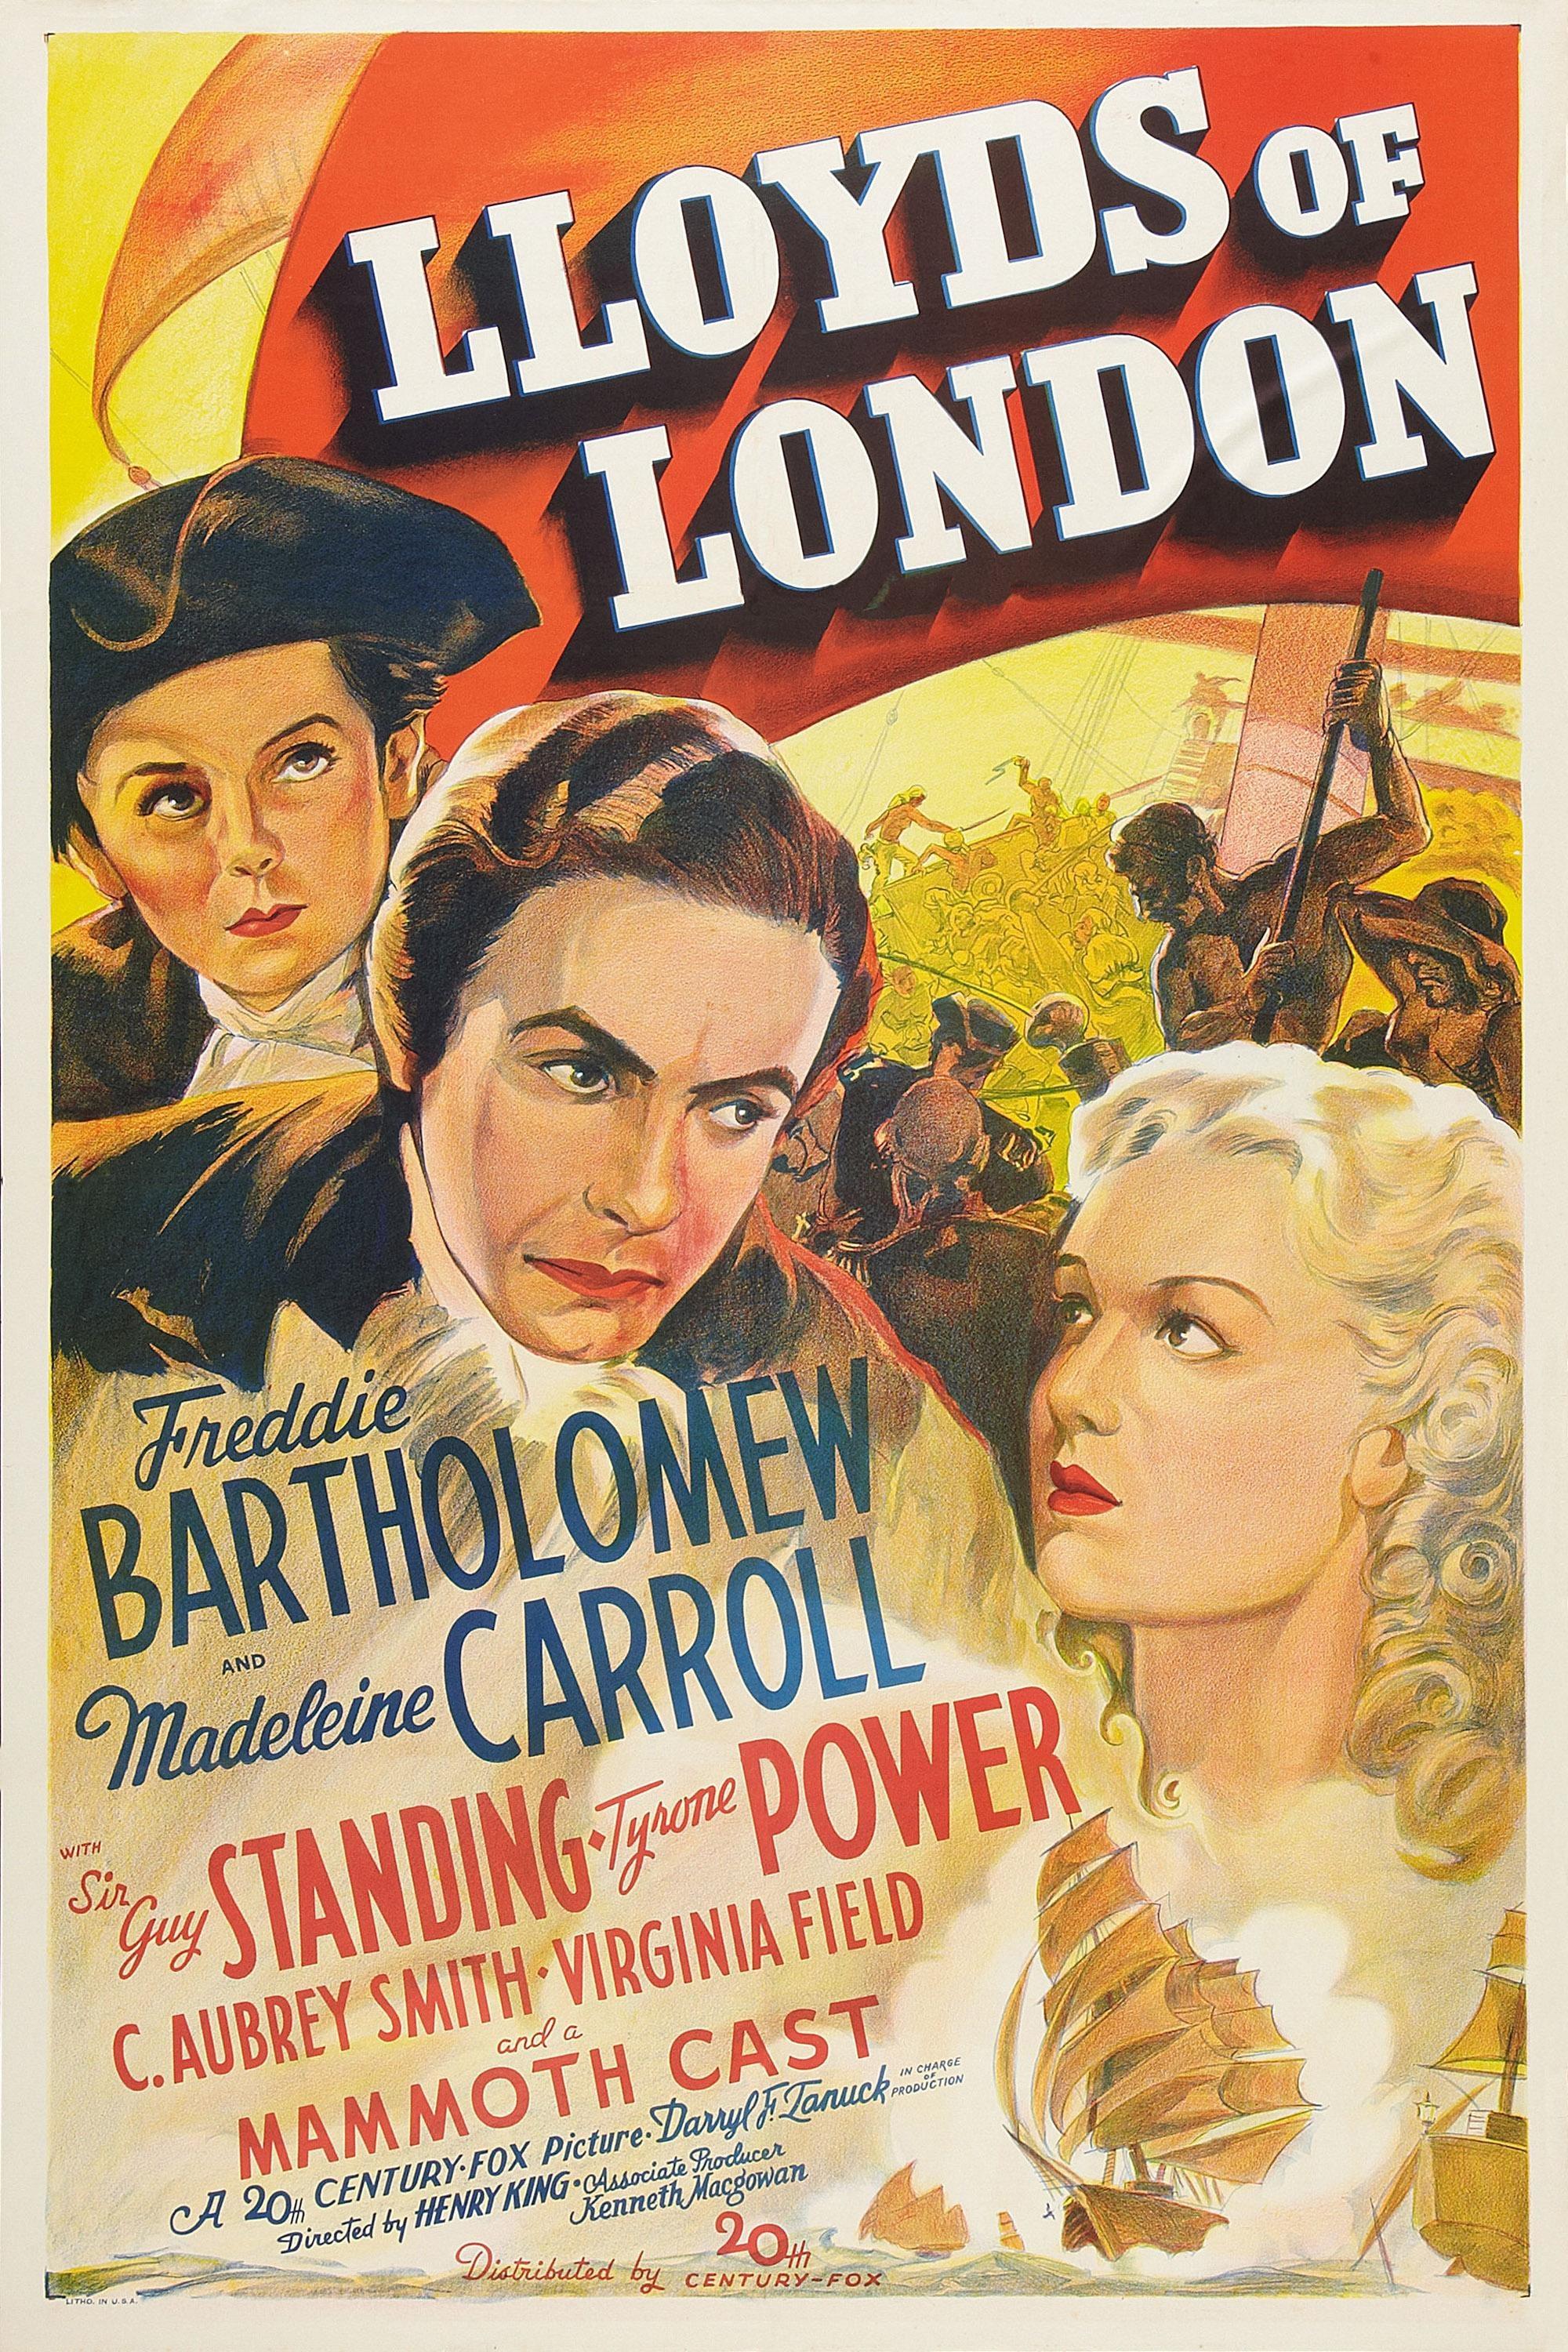 Постер фильма Lloyd's of London